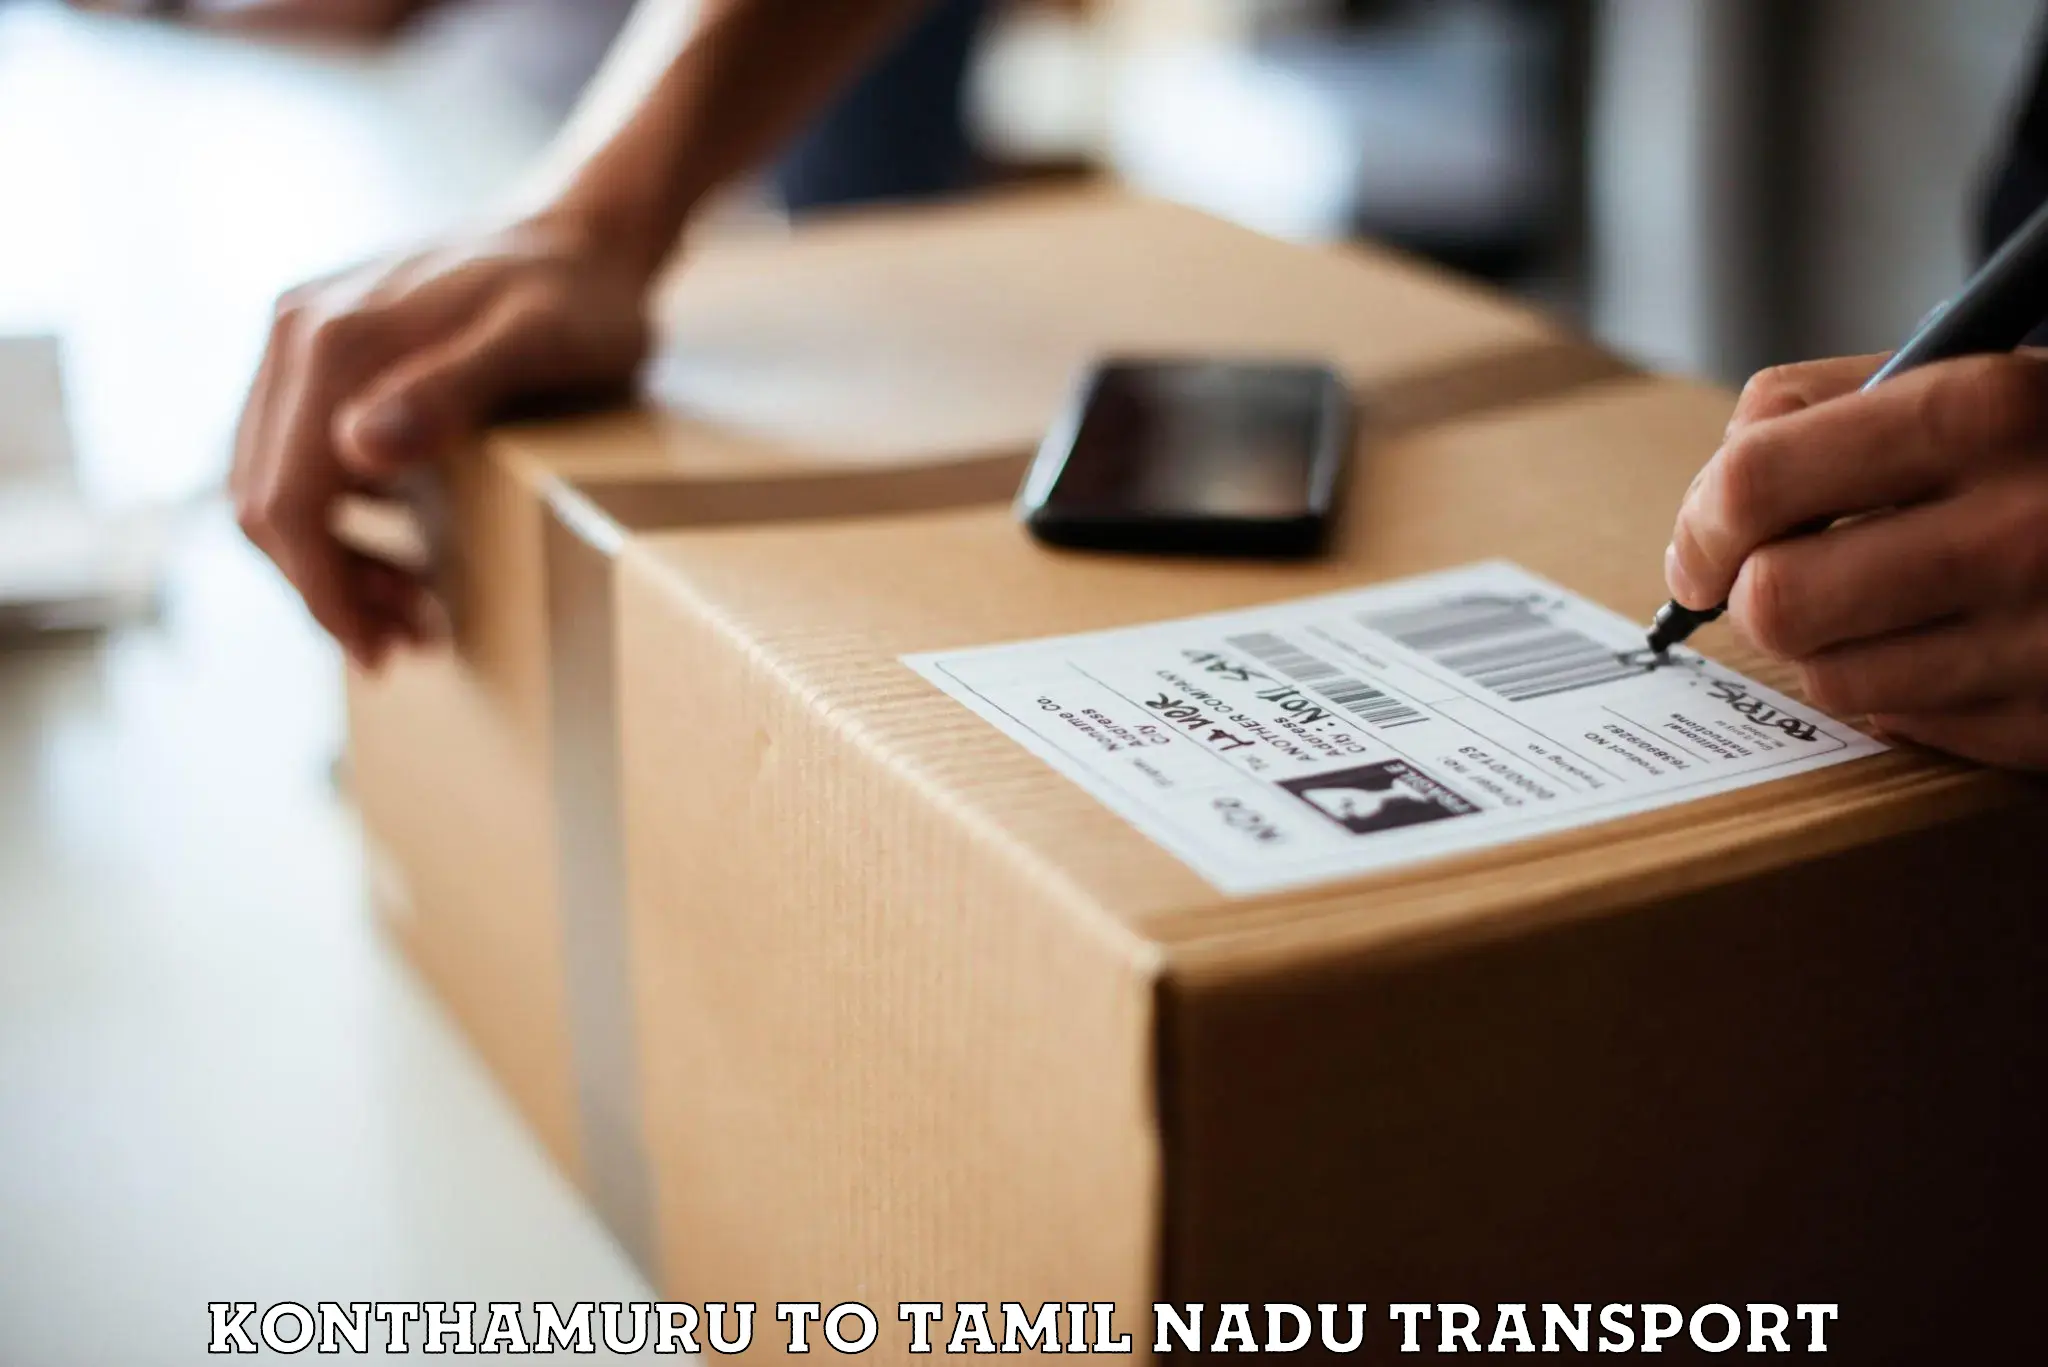 Nearest transport service Konthamuru to Thiruvadanai